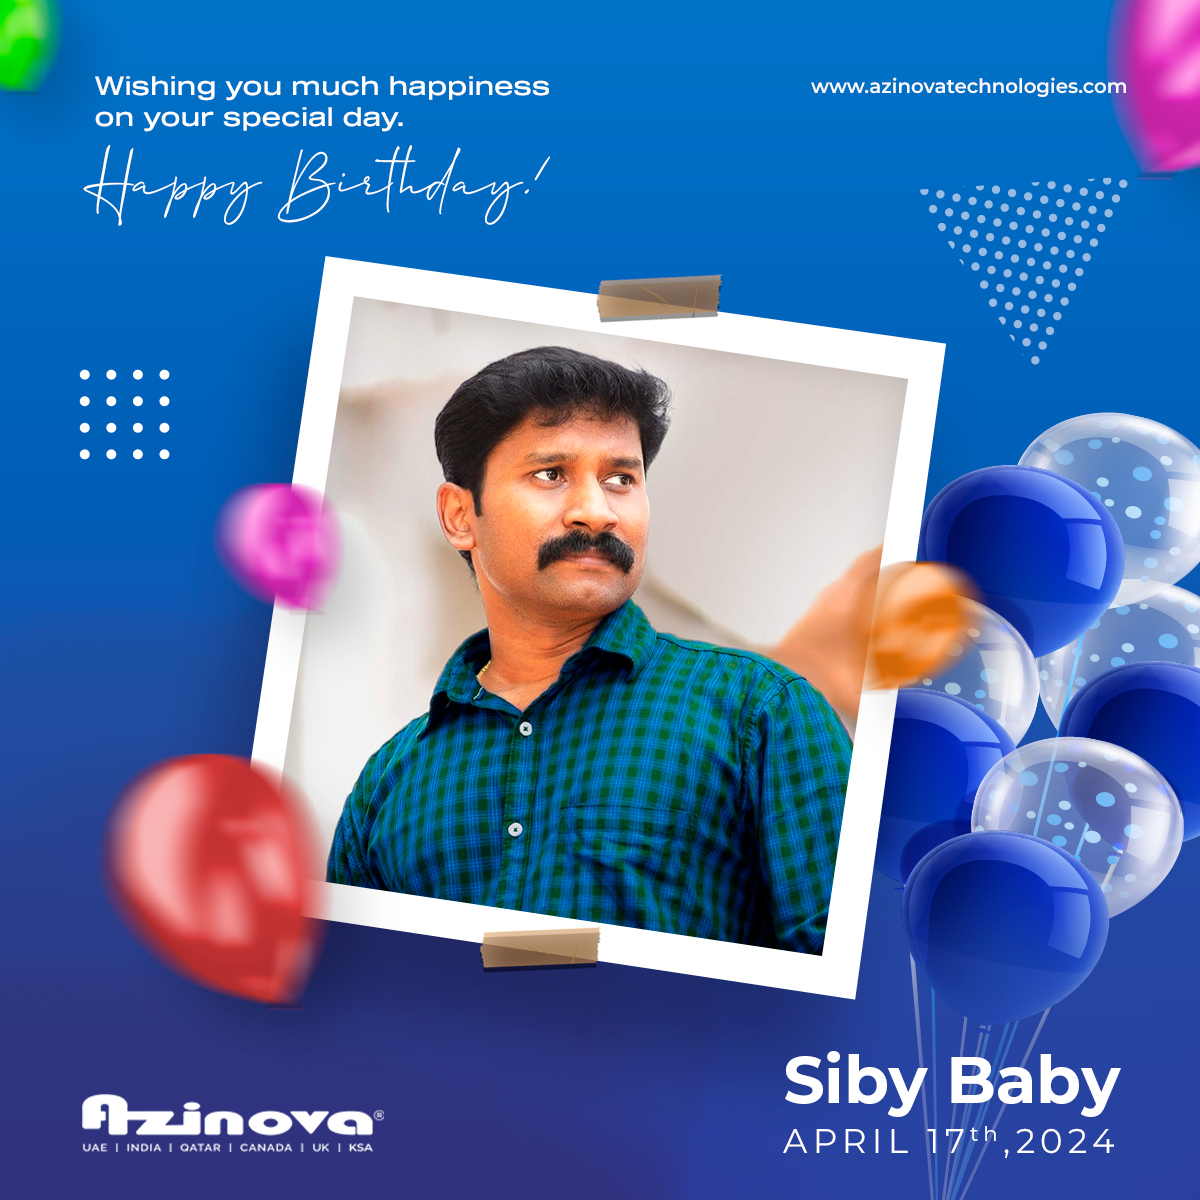 Happy Birthday, Siby Baby! 🎉 Wishing you a wonderful day and an incredible year ahead!

#happybirthday #birthdayboy #birthdaywishes